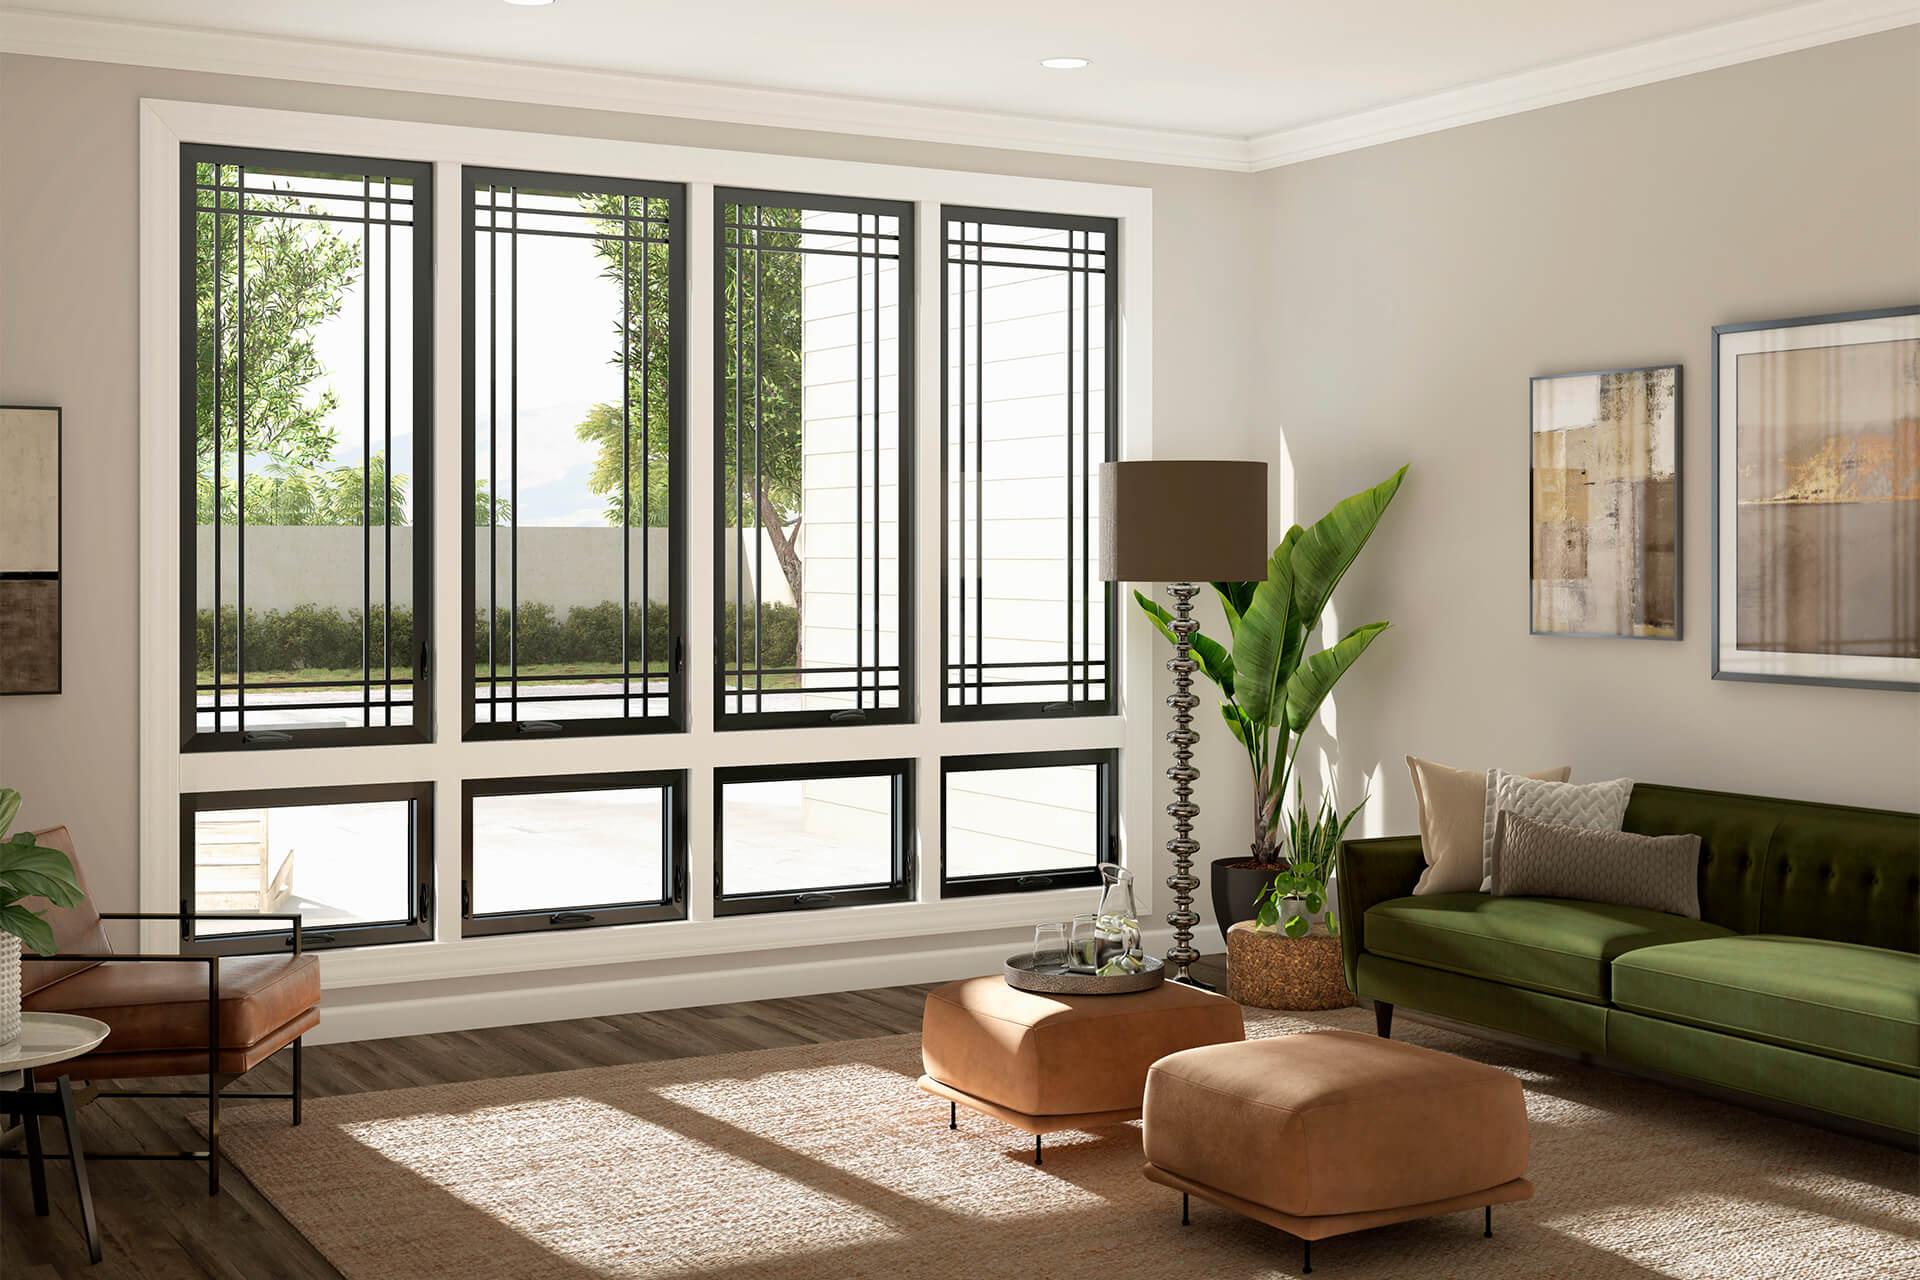 Modern living room design with energy-efficient windows